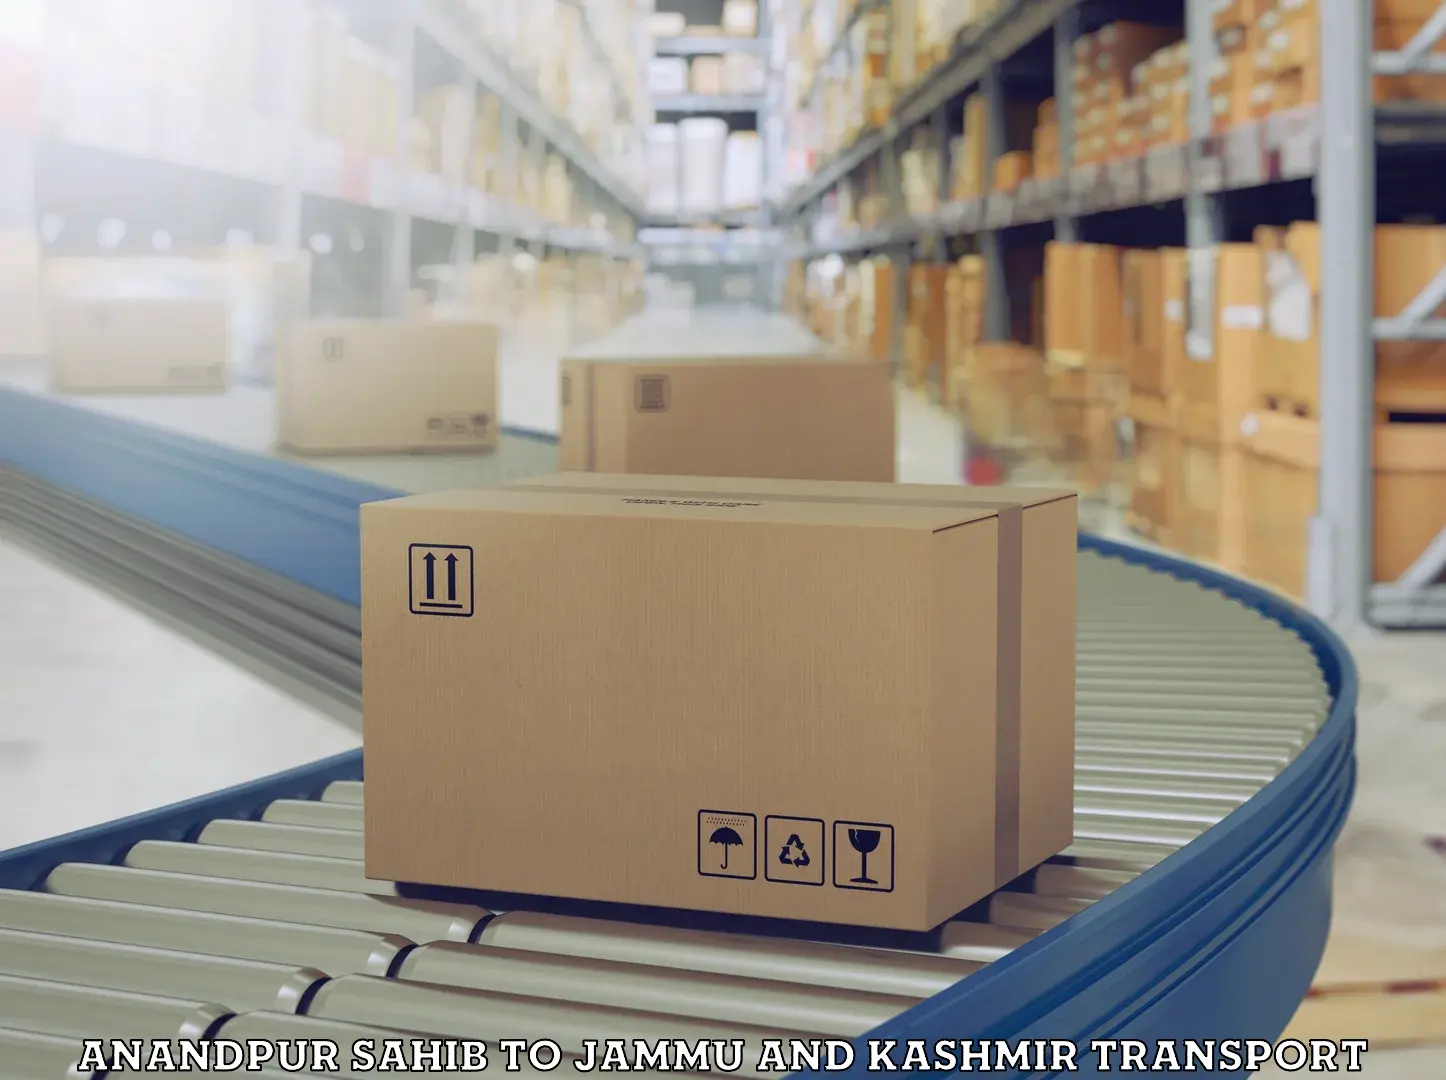 Shipping partner Anandpur Sahib to IIT Jammu